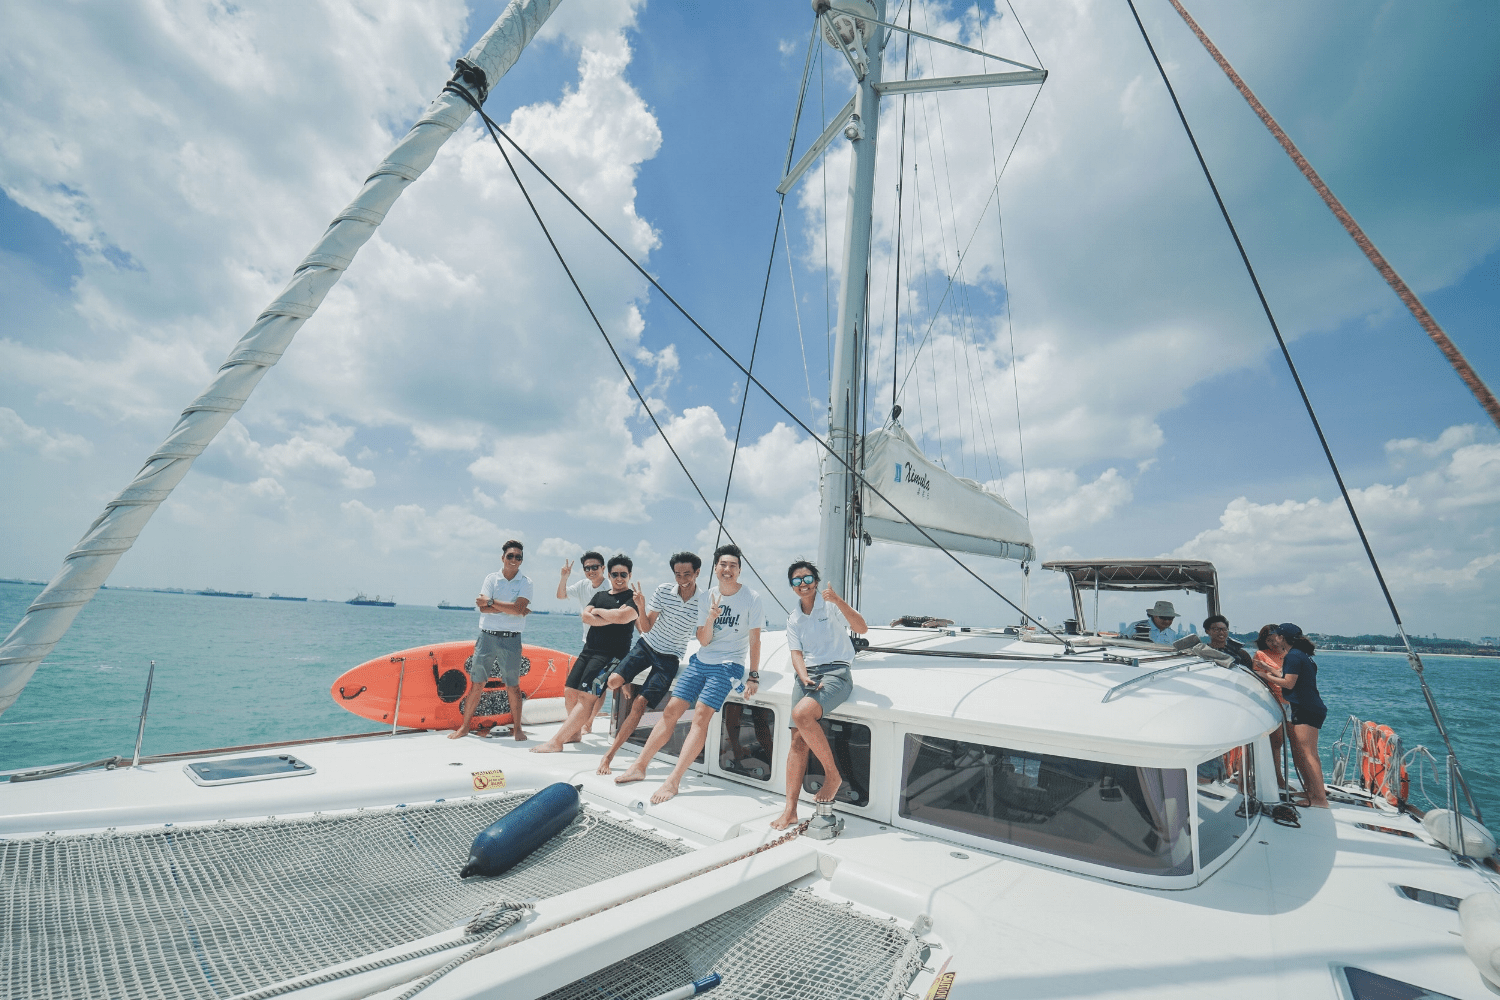 Yacht rental Singapore - The Barracks Hotel’s Sea Breeze & Champagne